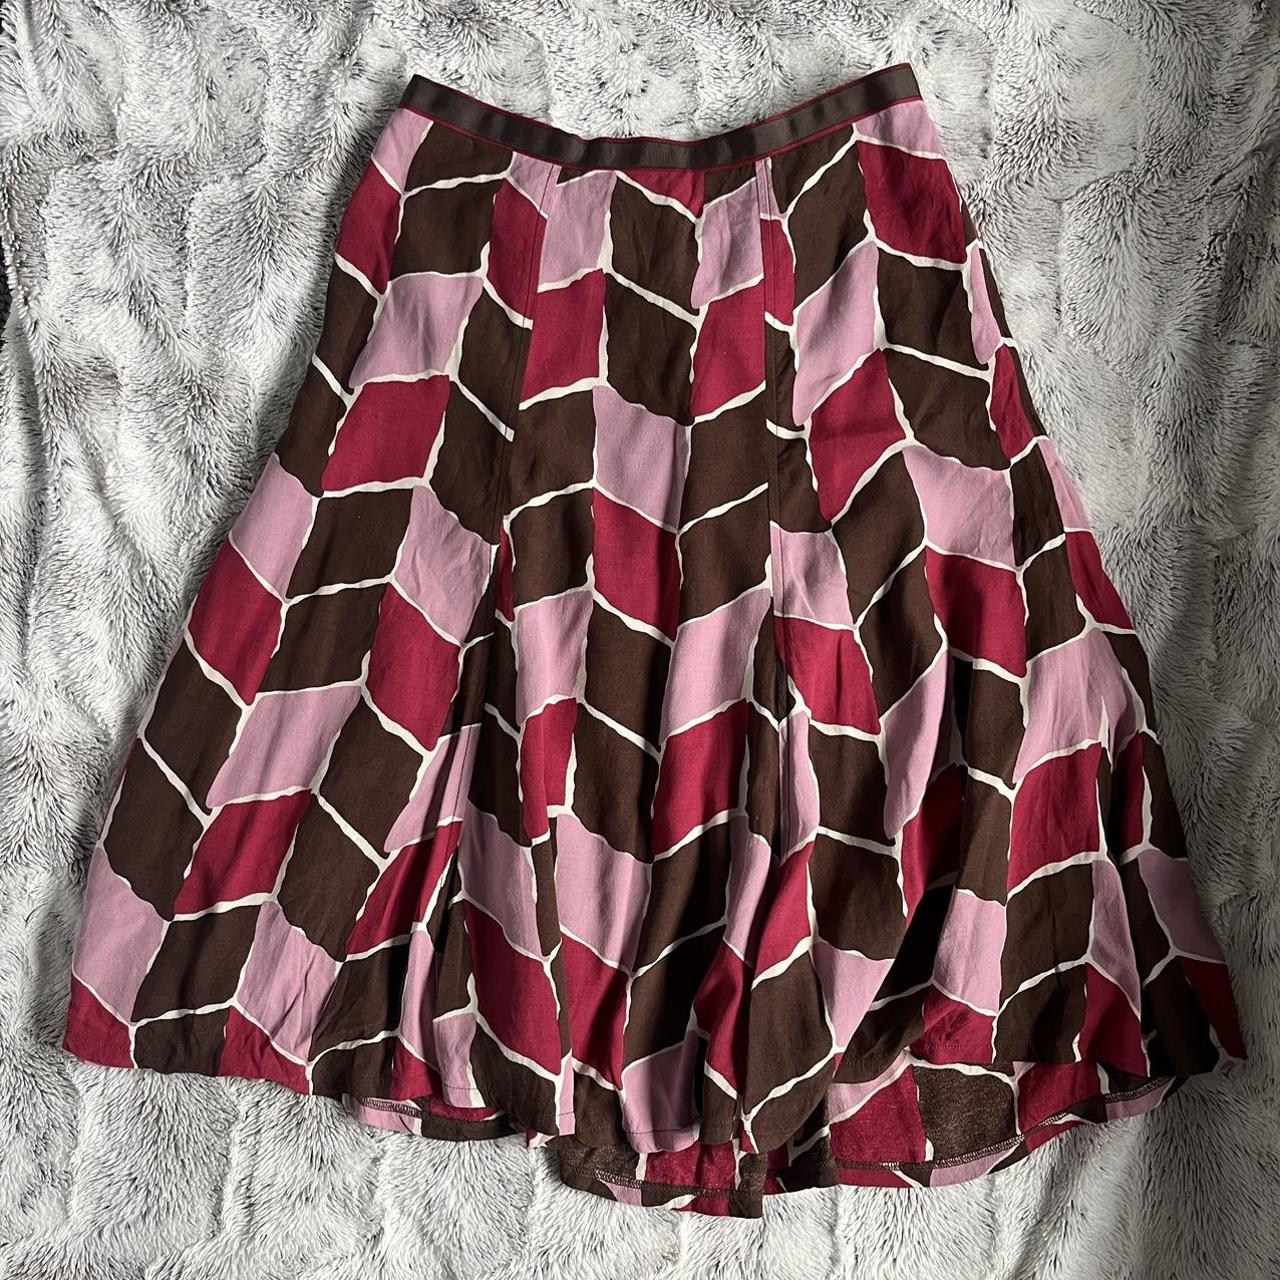 Stunning Boden geometric pink & brown midi skirt... - Depop